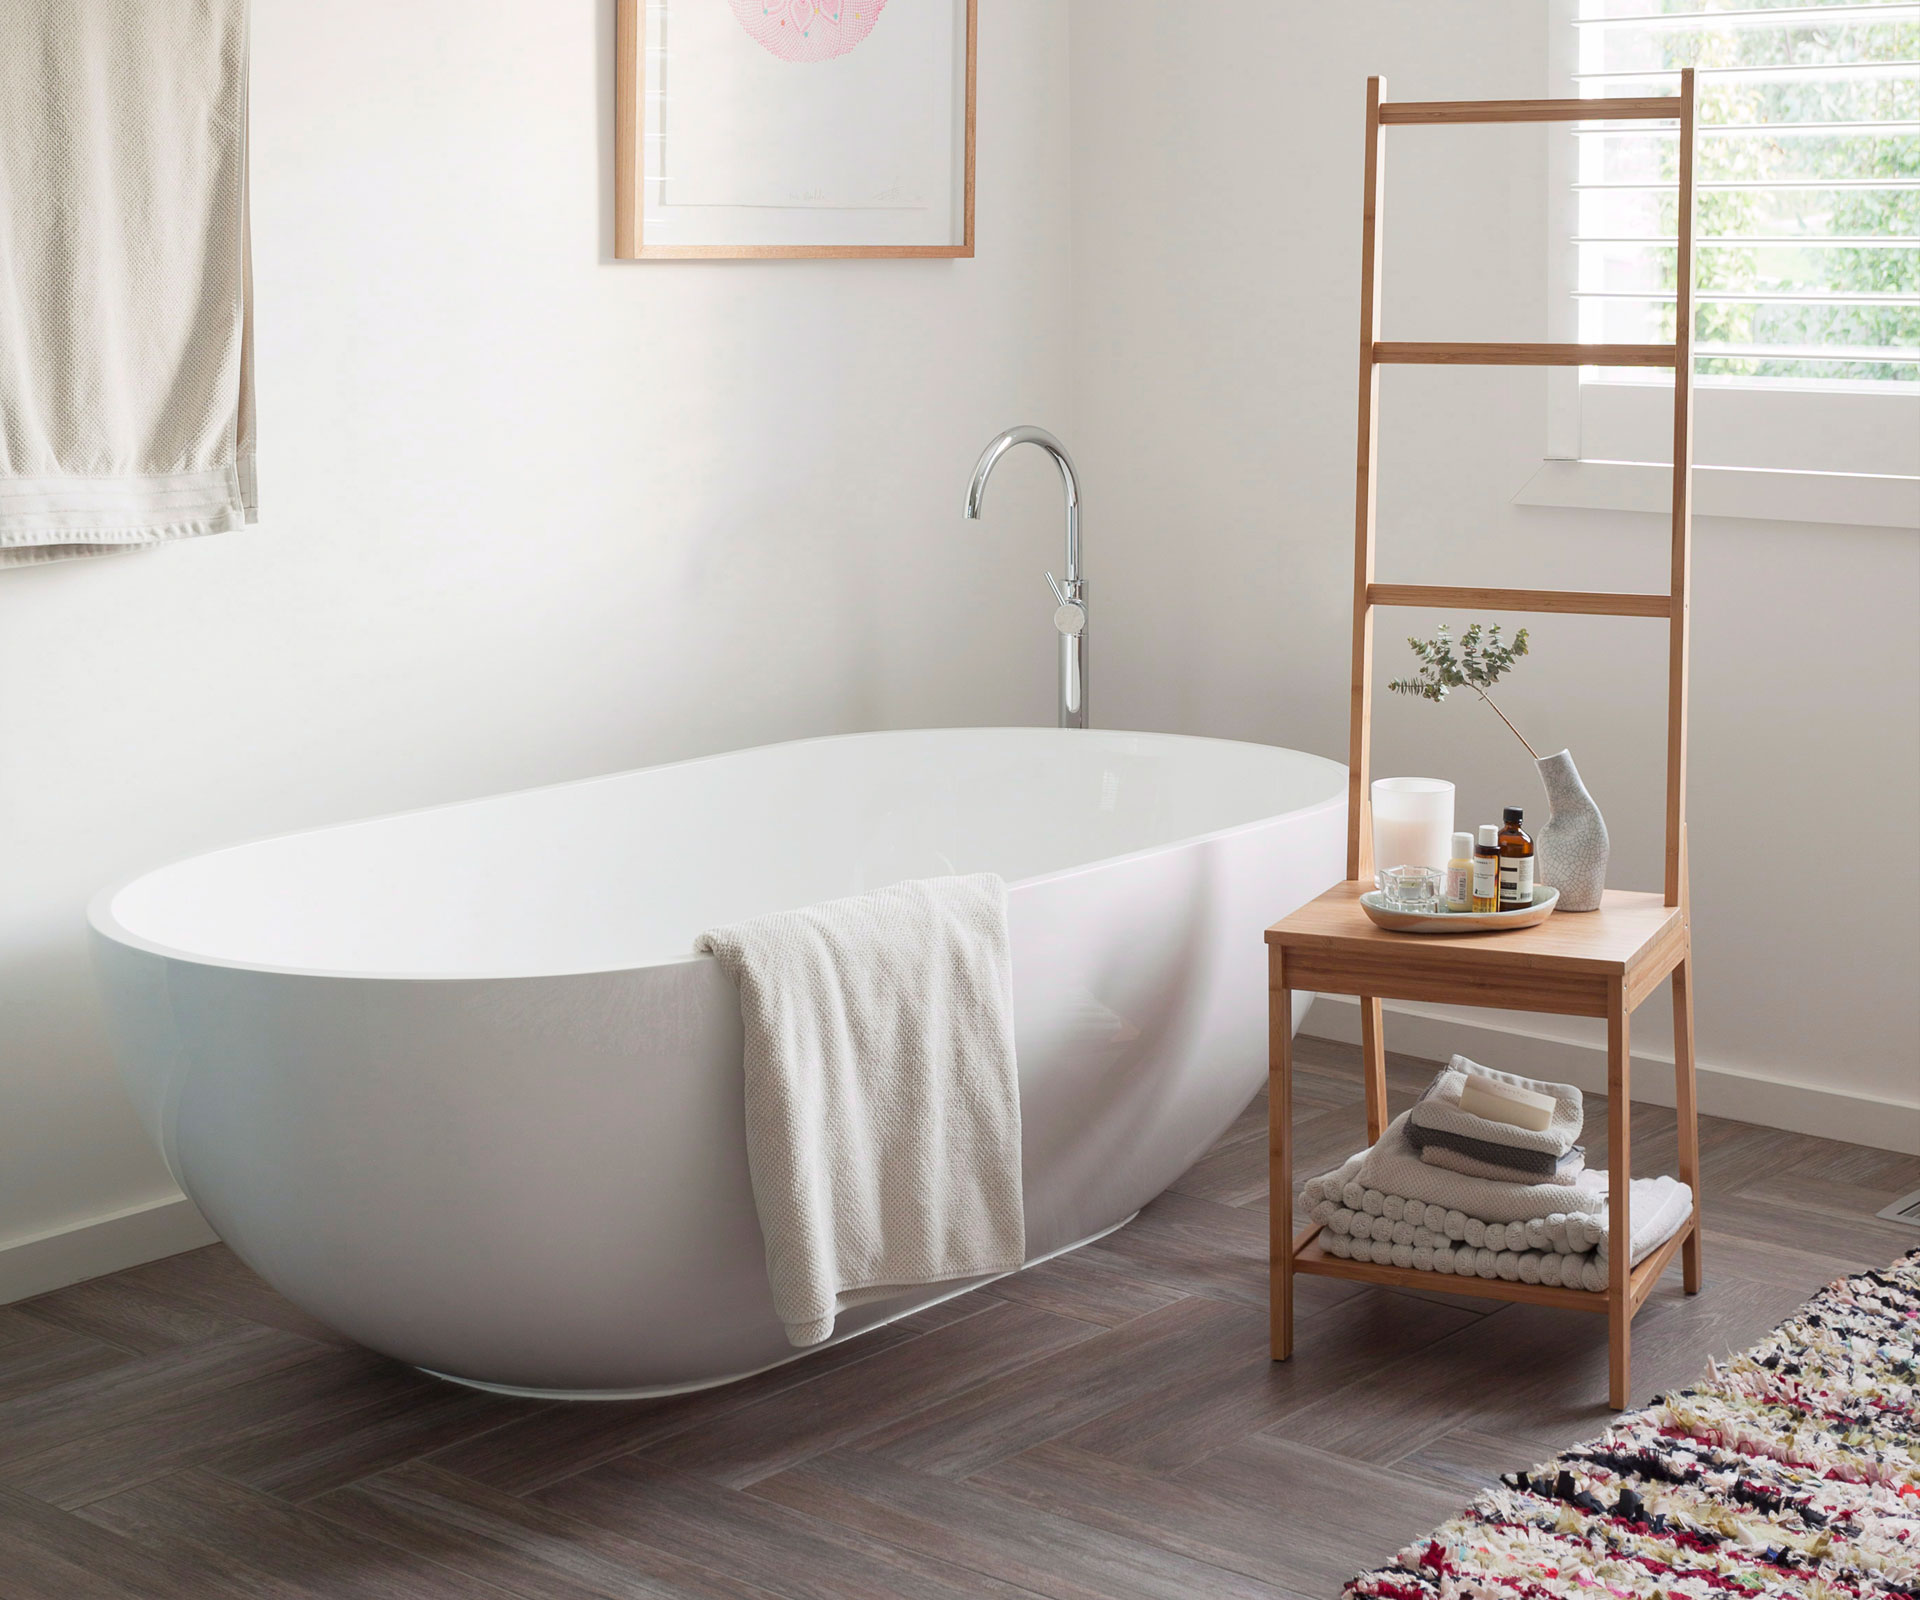 8 stylish bathroom flooring ideas chosen by interior designers